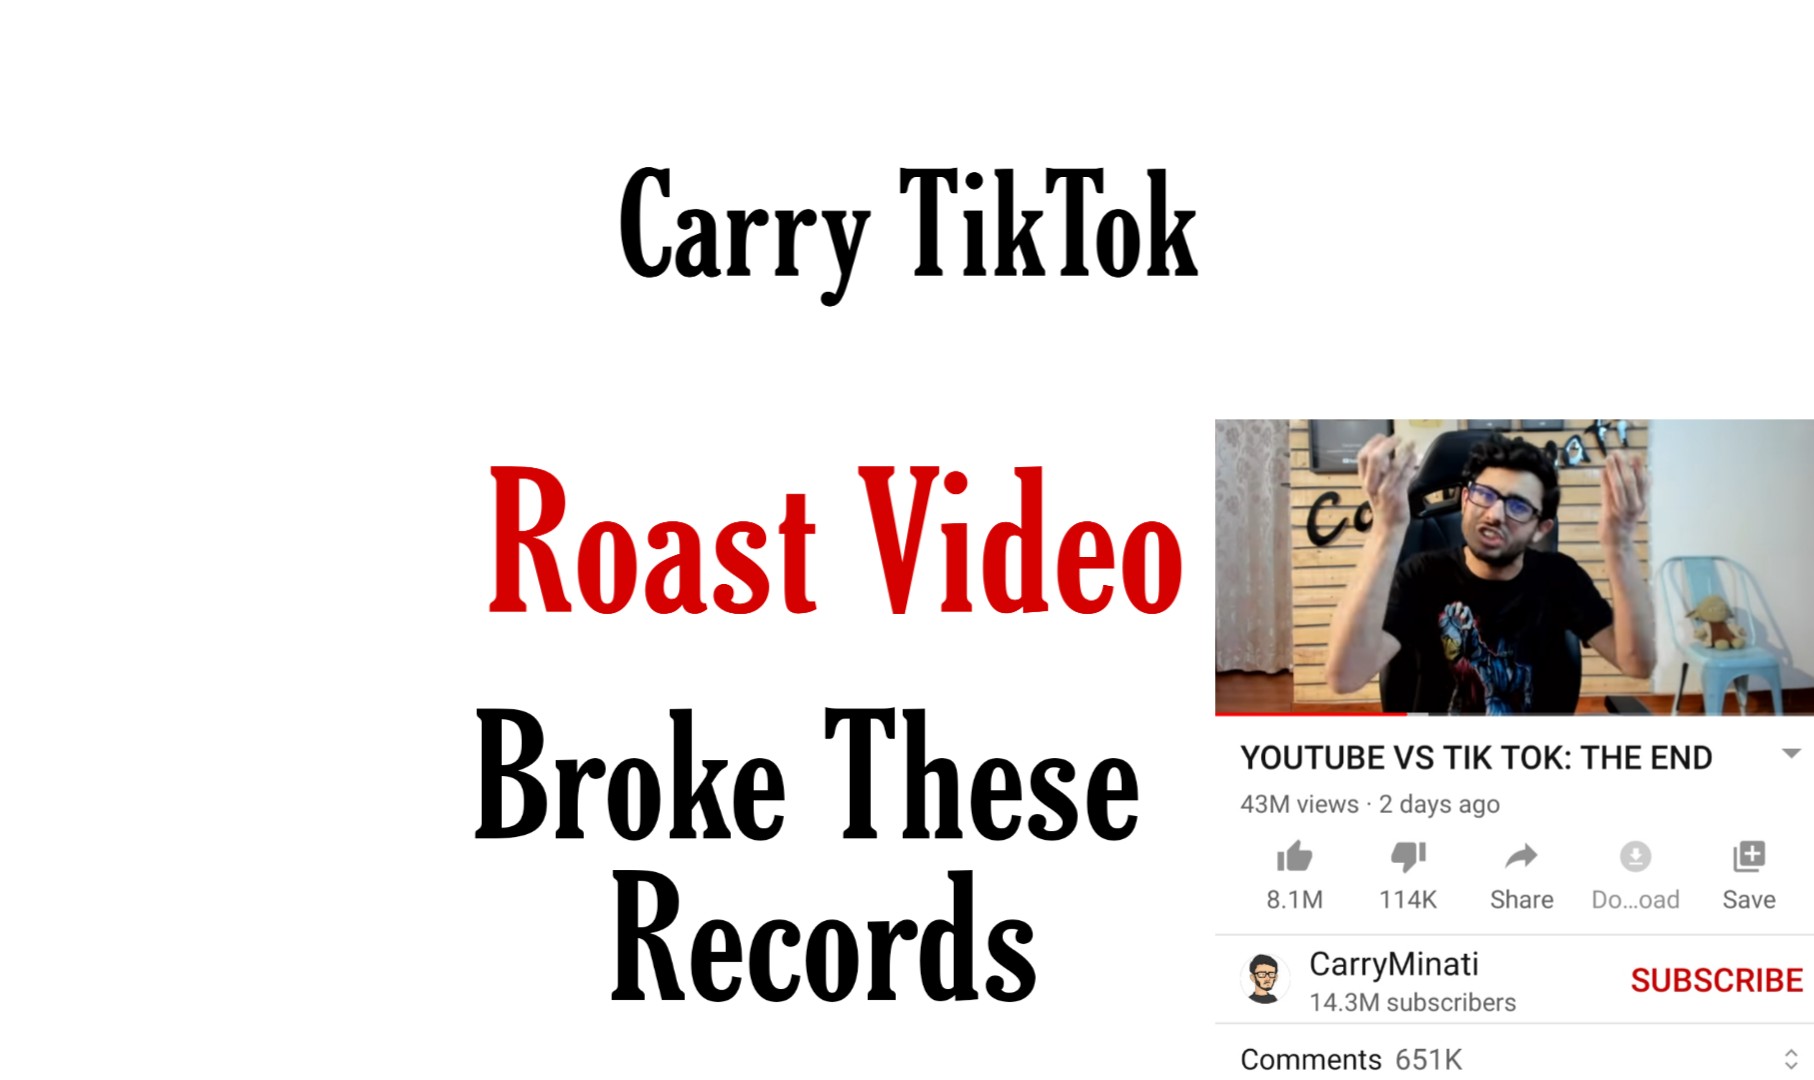 YouTube Vs TikTok CarryMinati